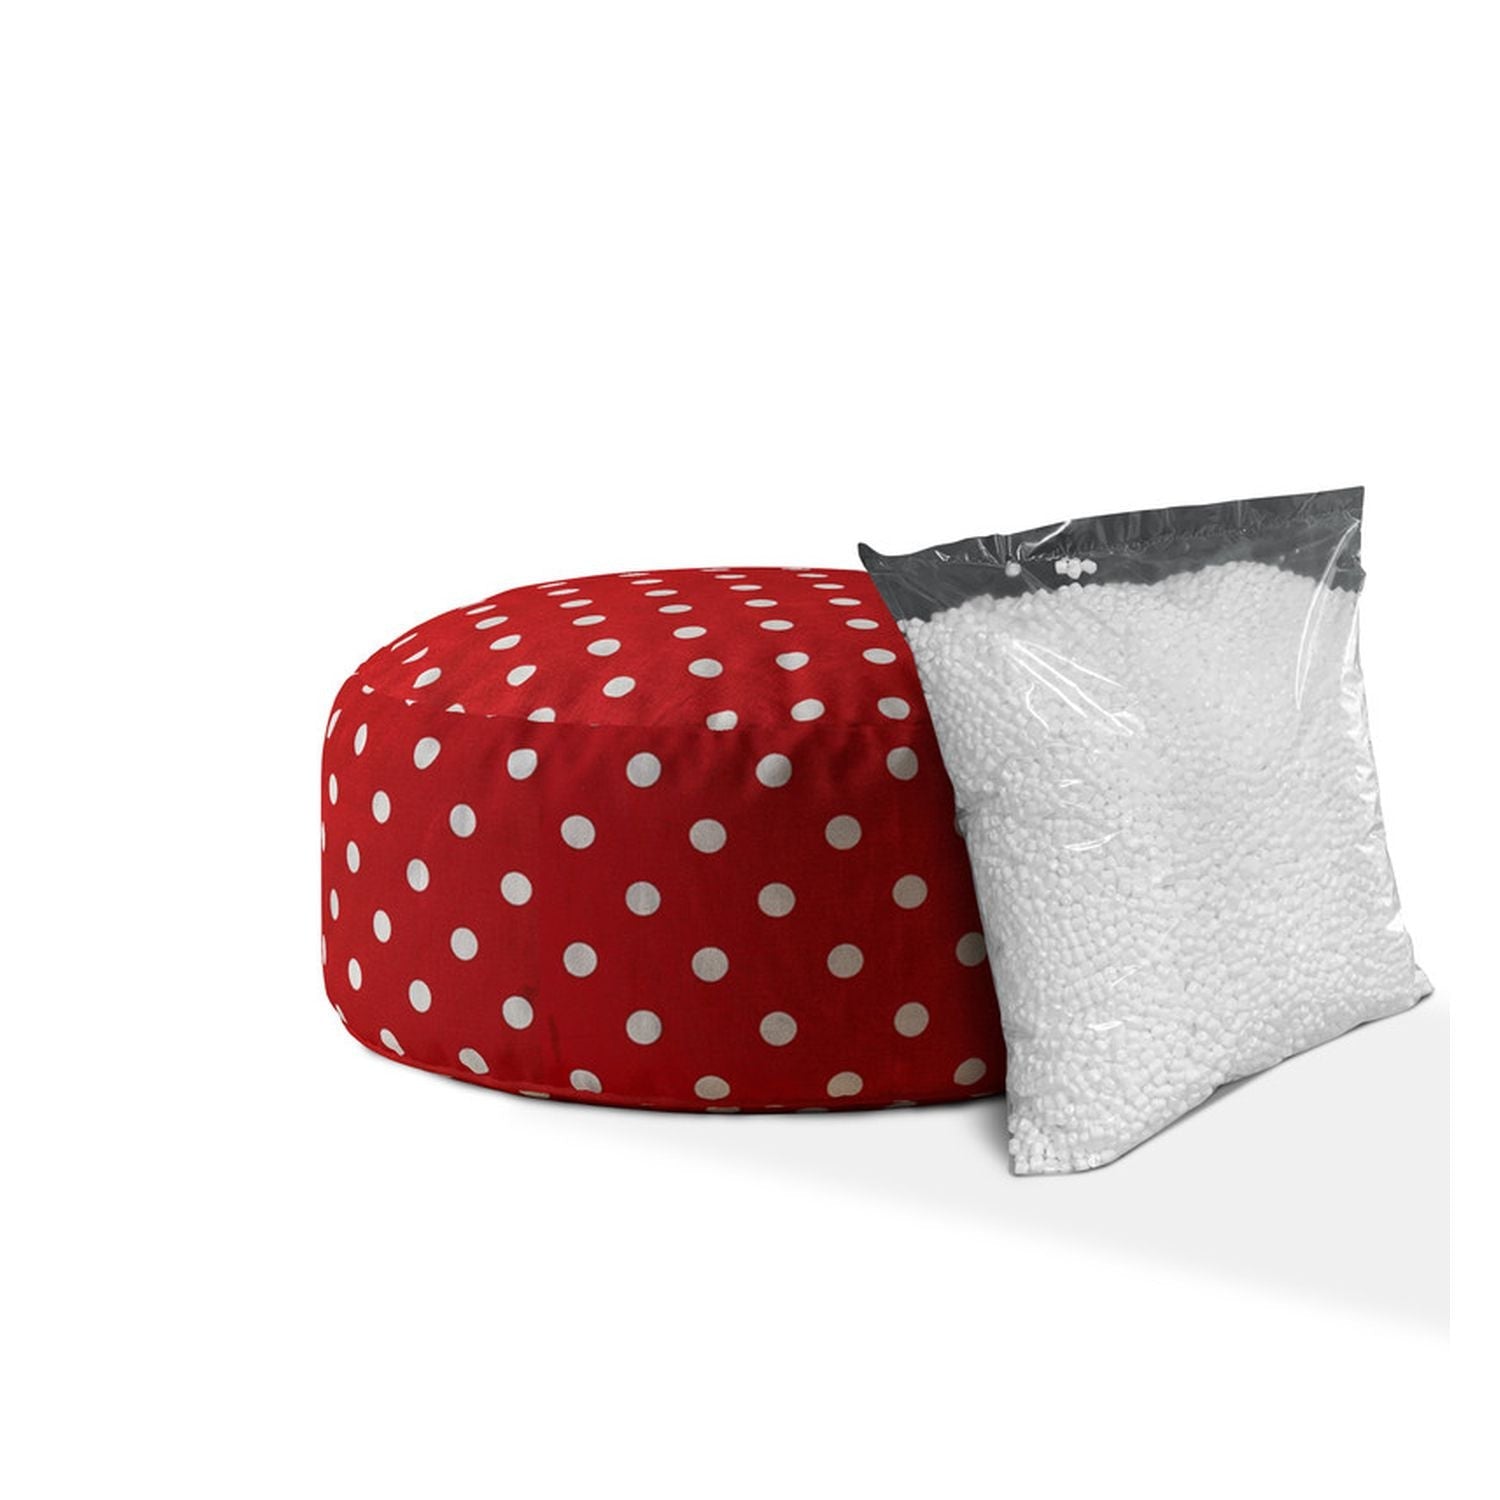 24" Red And White Cotton Round Polka Dots Pouf Ottoman